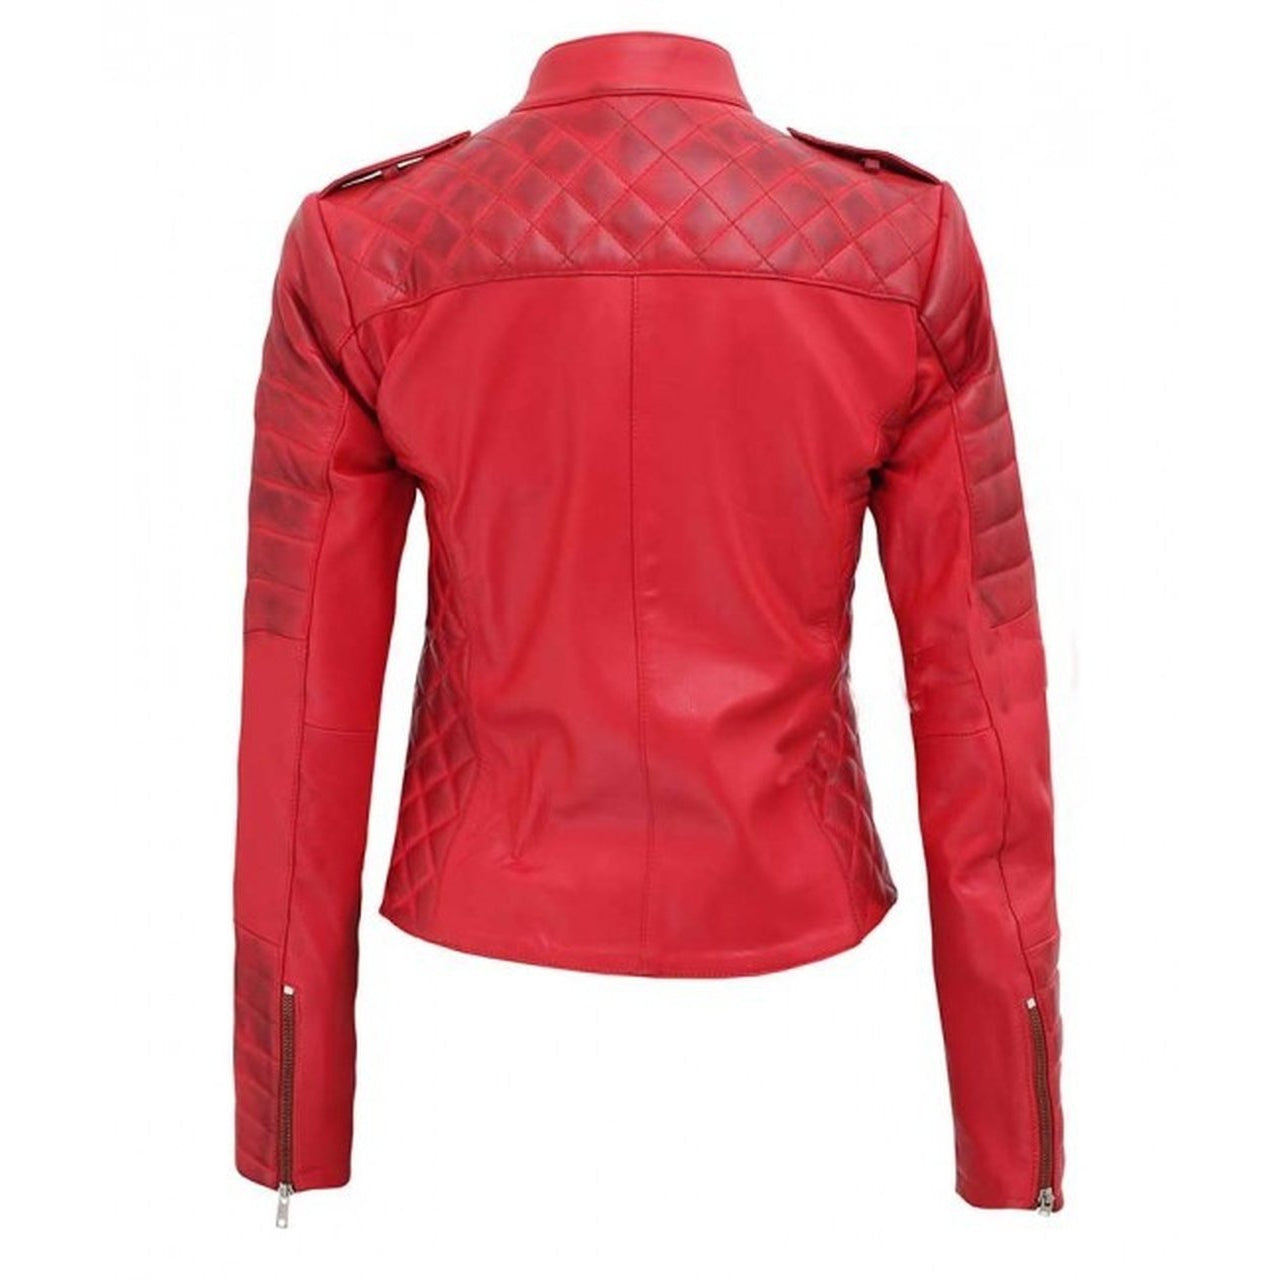 Asymmetrical Women Red Leather Jacket - Leather Jacket